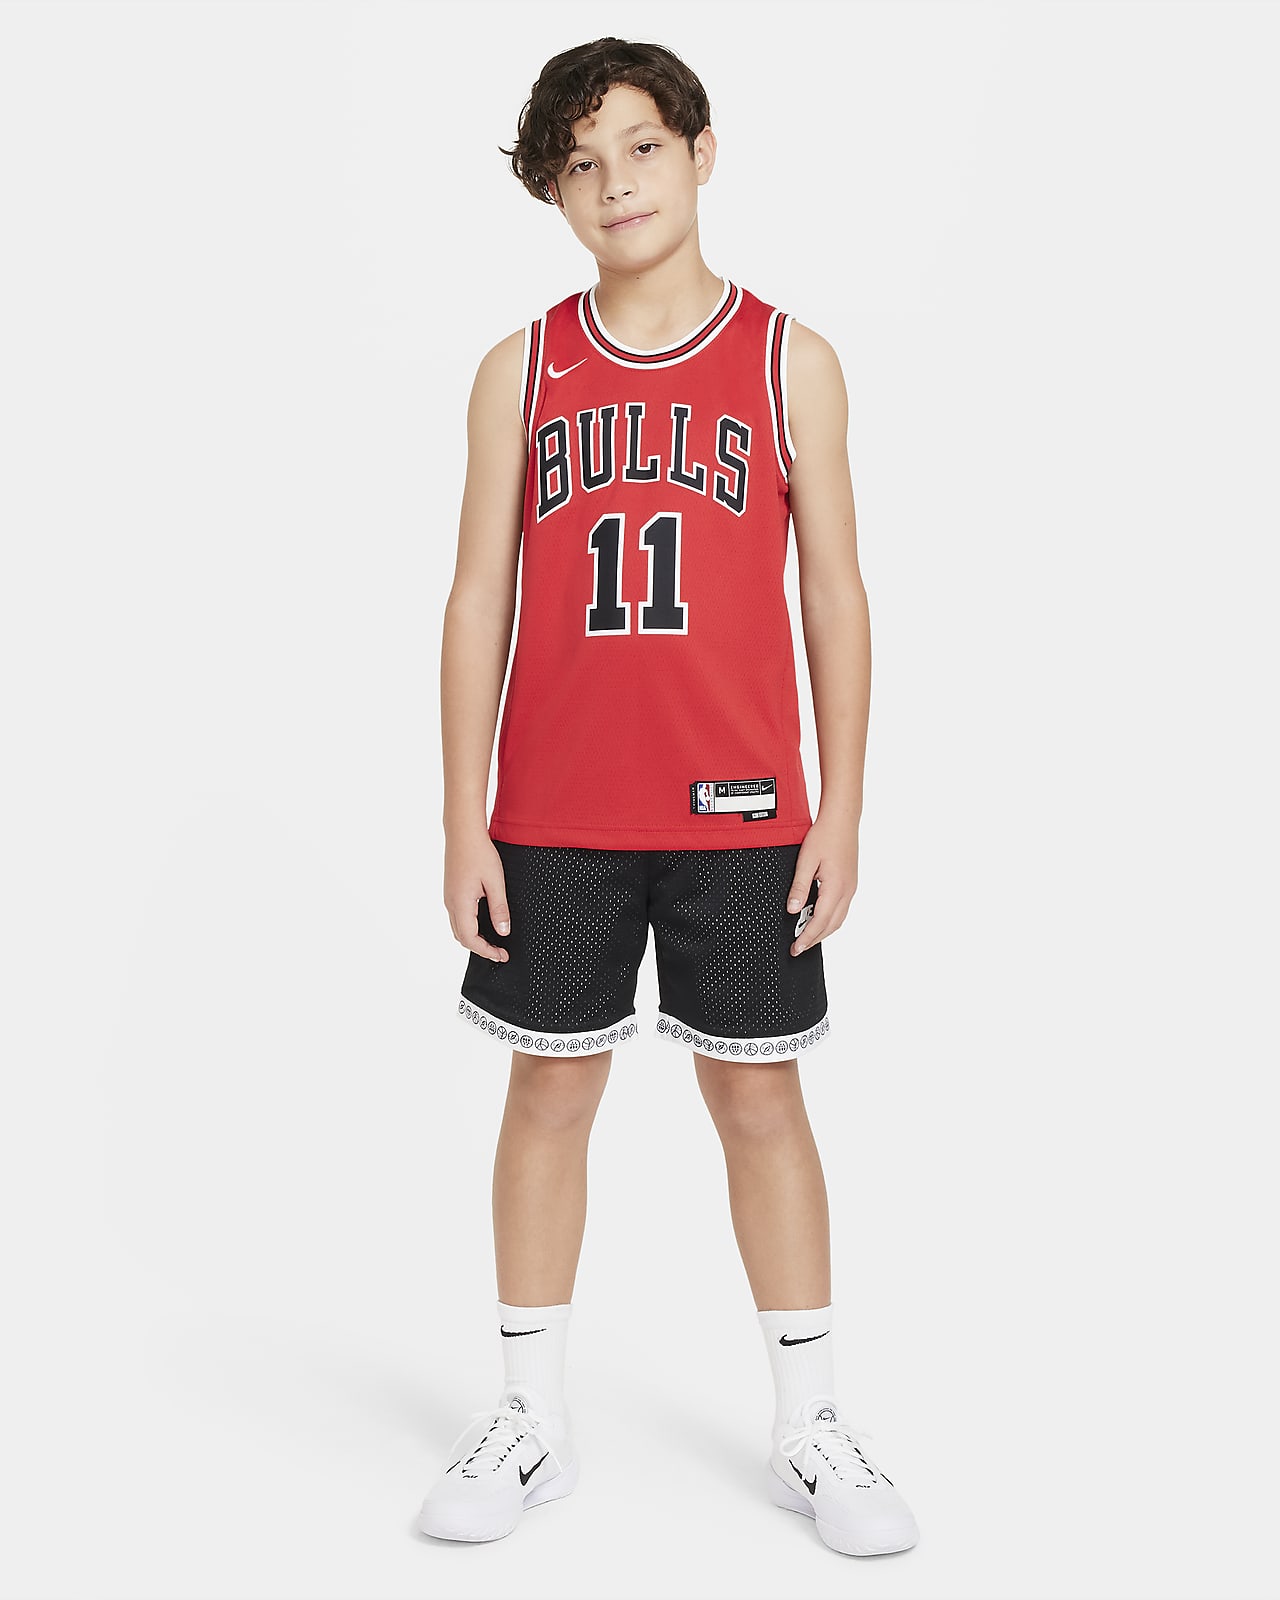 Nike DeMar DeRozan Chicago Bulls Red Jersey (Sz S) 100% Authentic